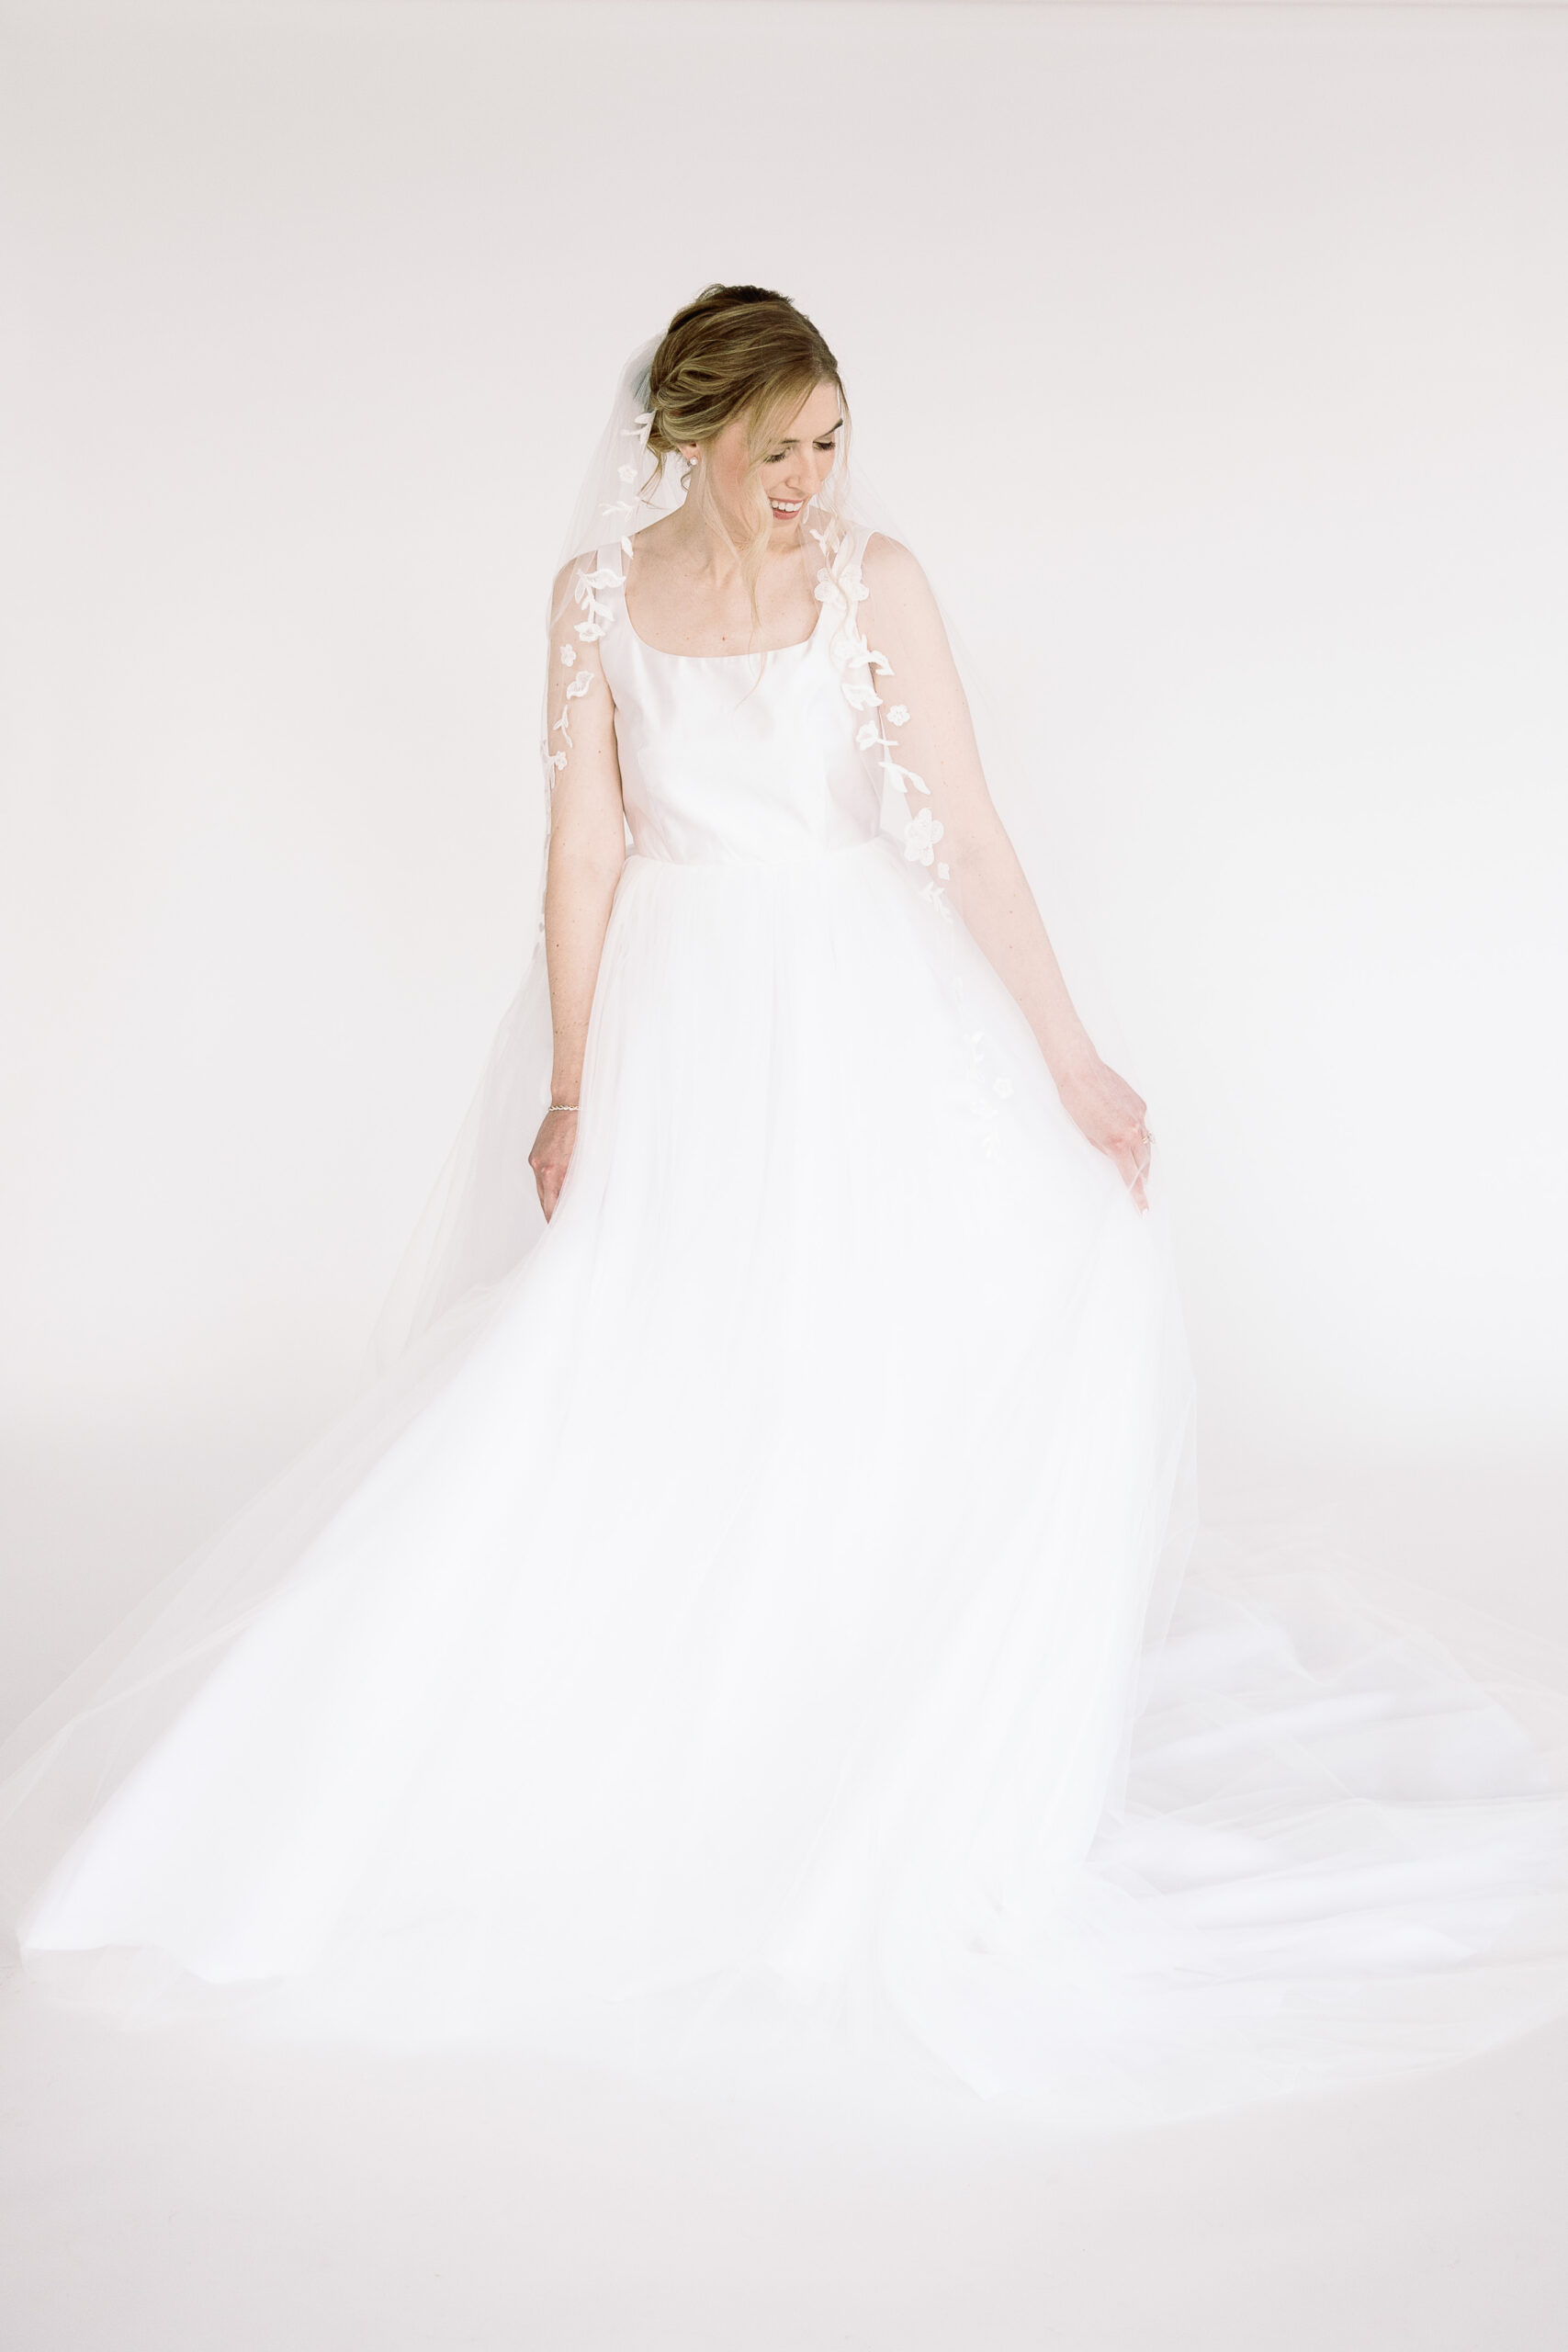 sarah kolis couture gown on bride ashley r